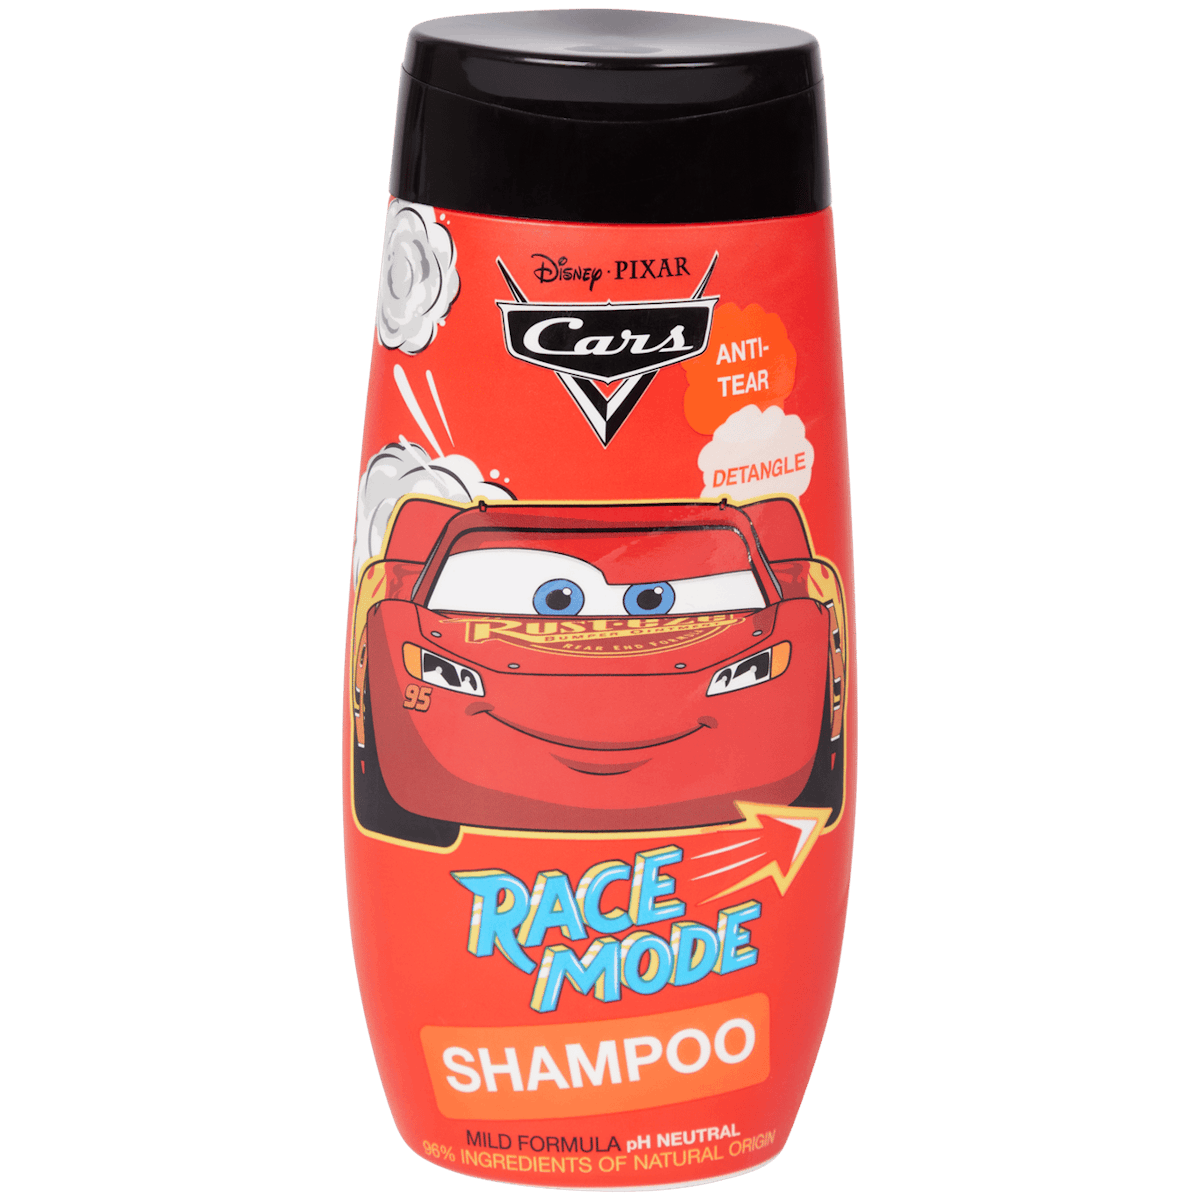 Disney shampoo